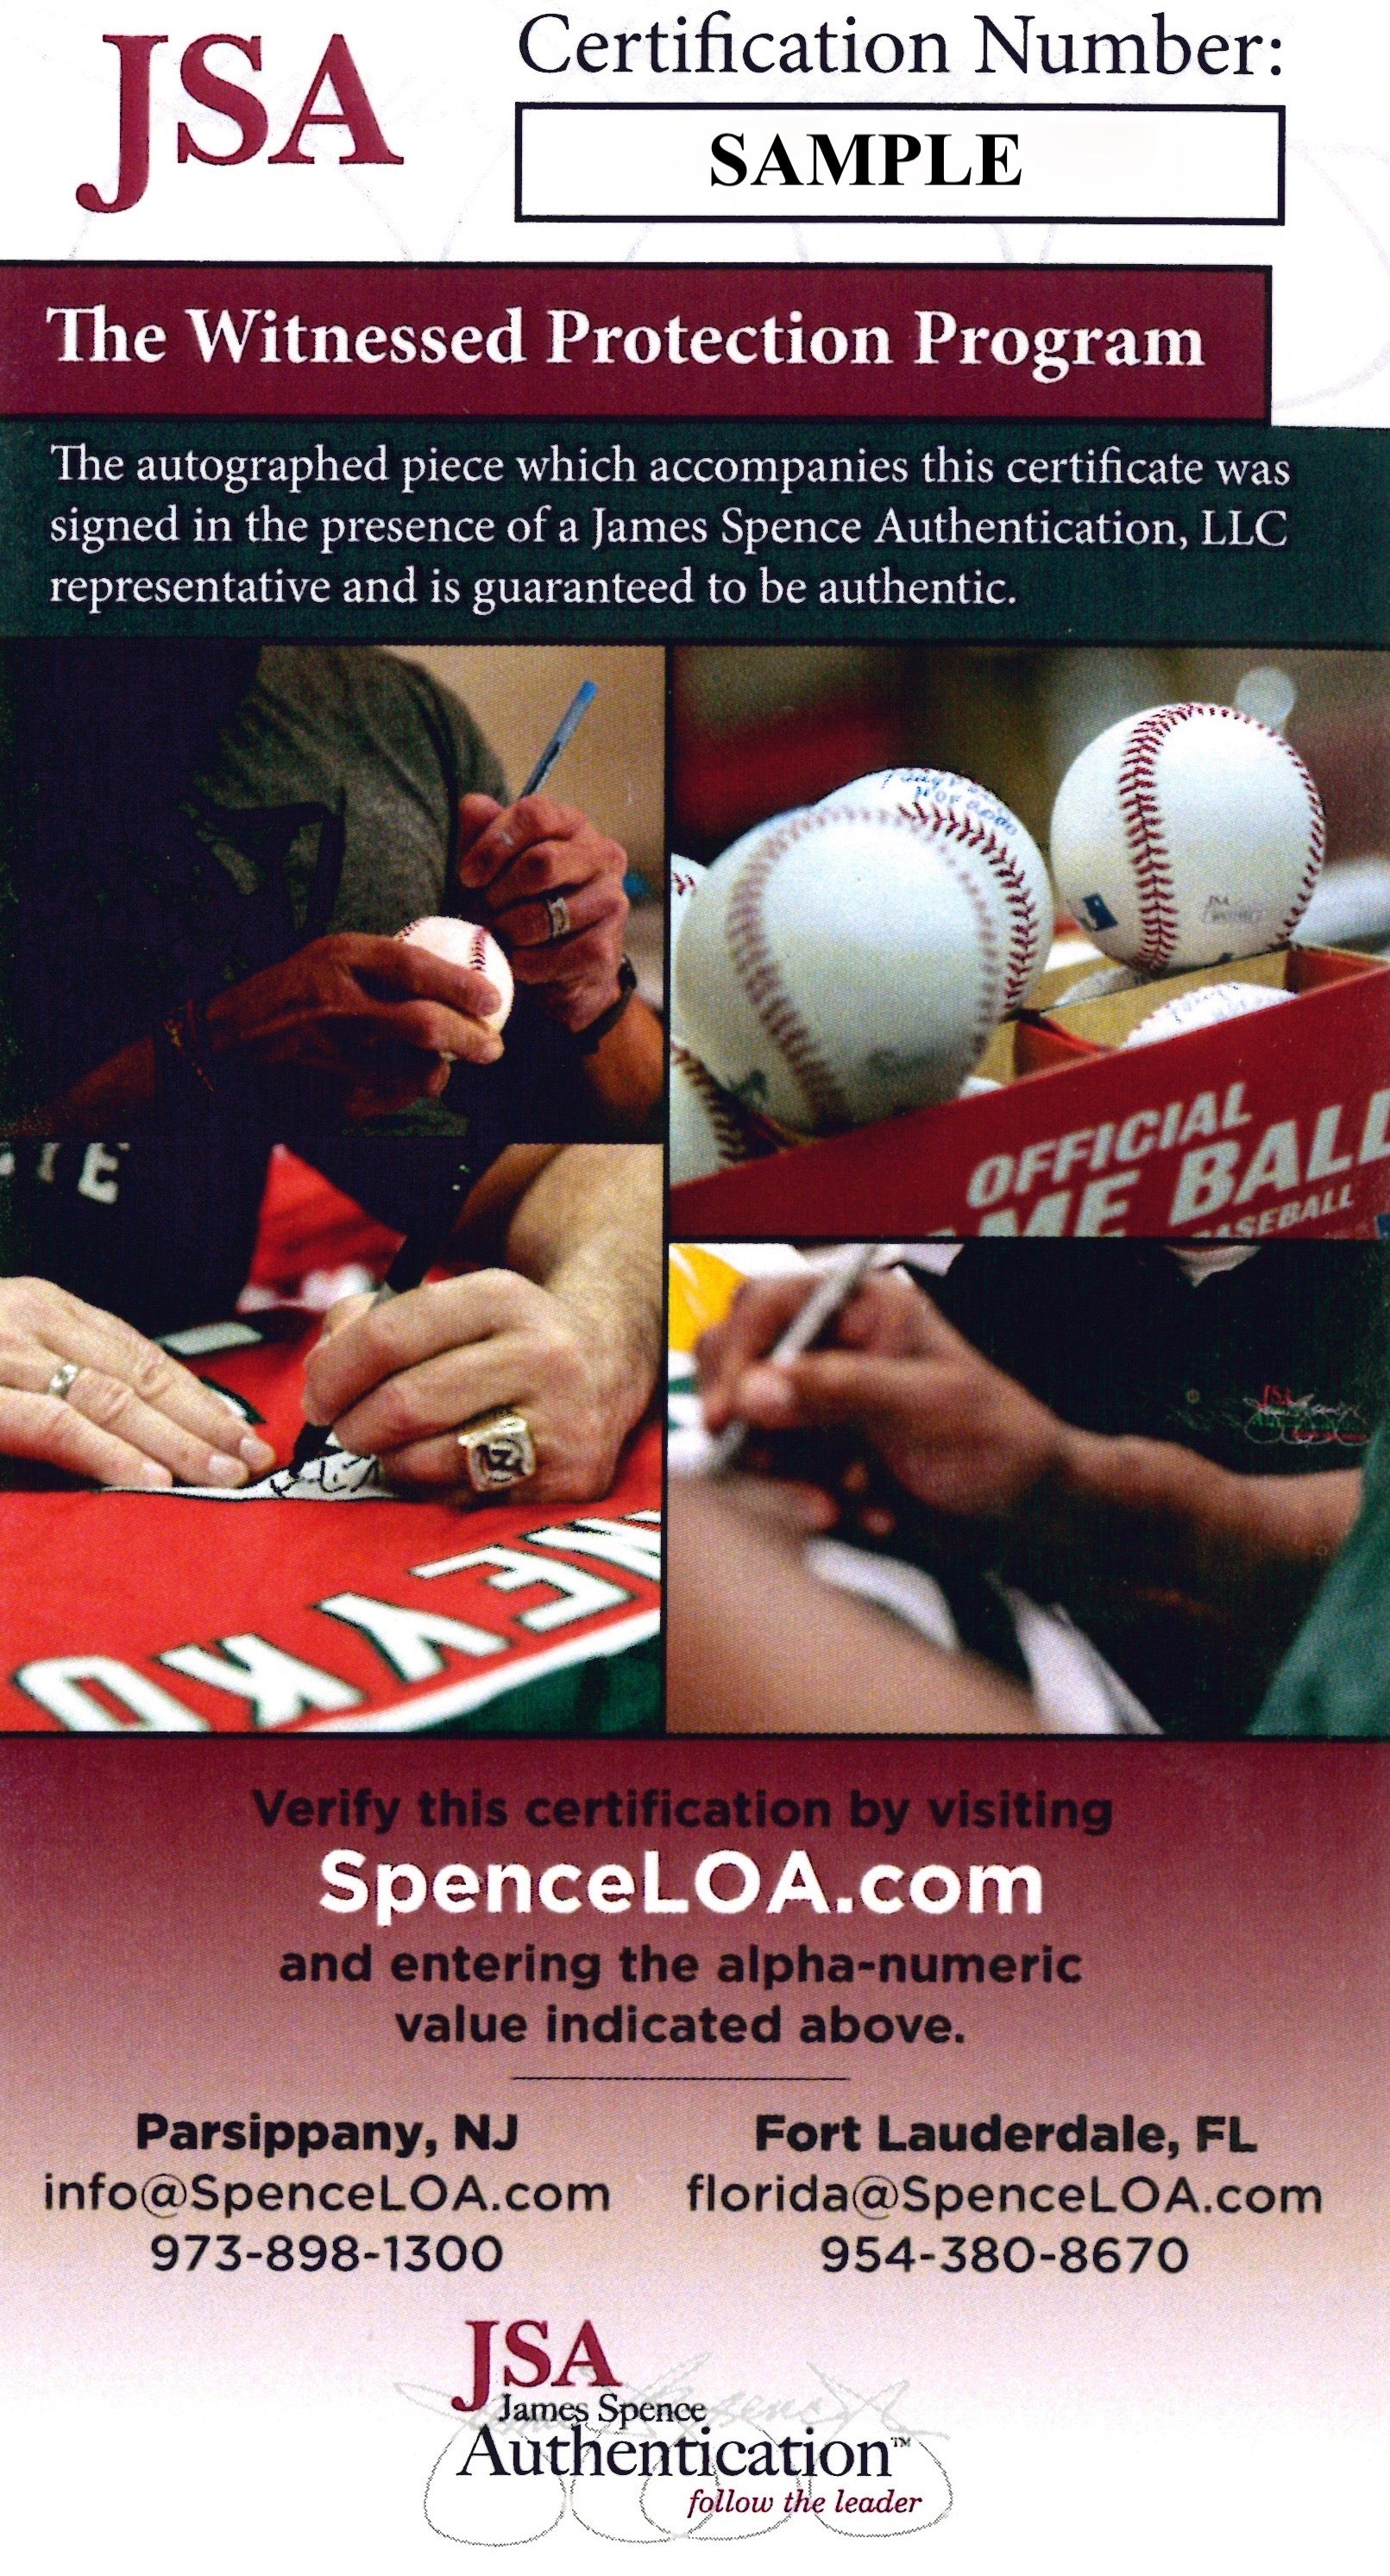 Brad Lidge & Carlos Ruiz 2008 World Series Last Out Celebration  Philadelphia Phillies Framed Baseball Photo